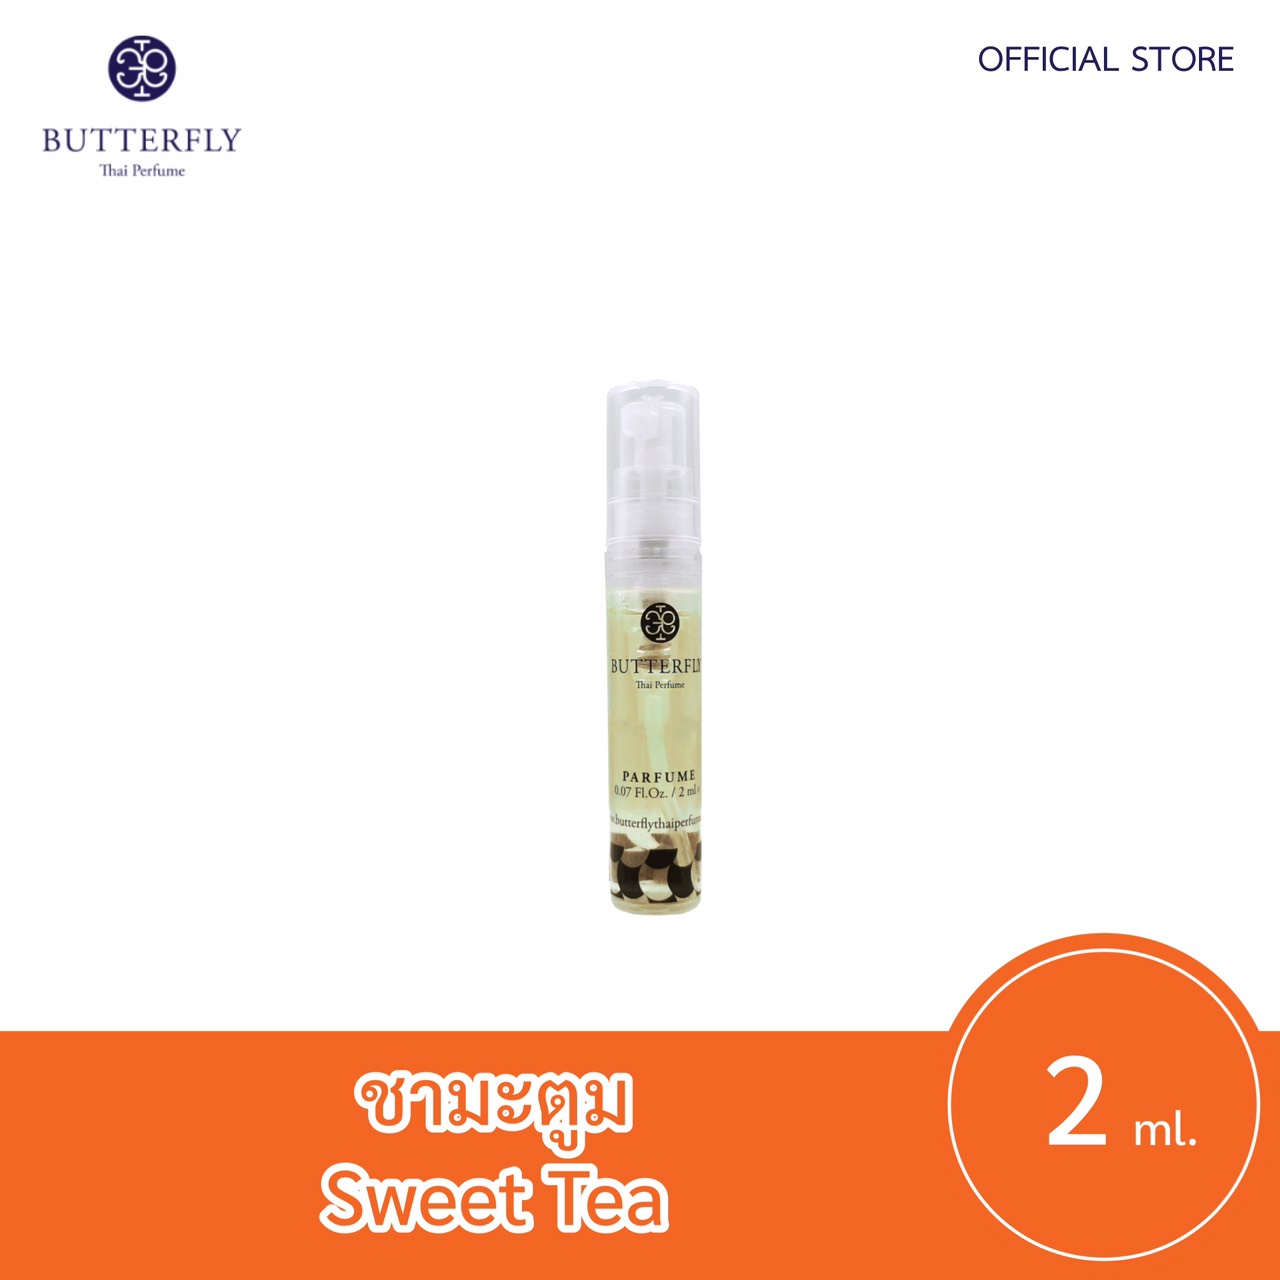 Butterfly Thai Perfume - น้ำหอมบัตเตอร์ฟลาย ไทย เพอร์ฟูม  ขนาดทดลอง 2ml.  กลิ่น ชามะตูมปริมาณ (มล.) 2